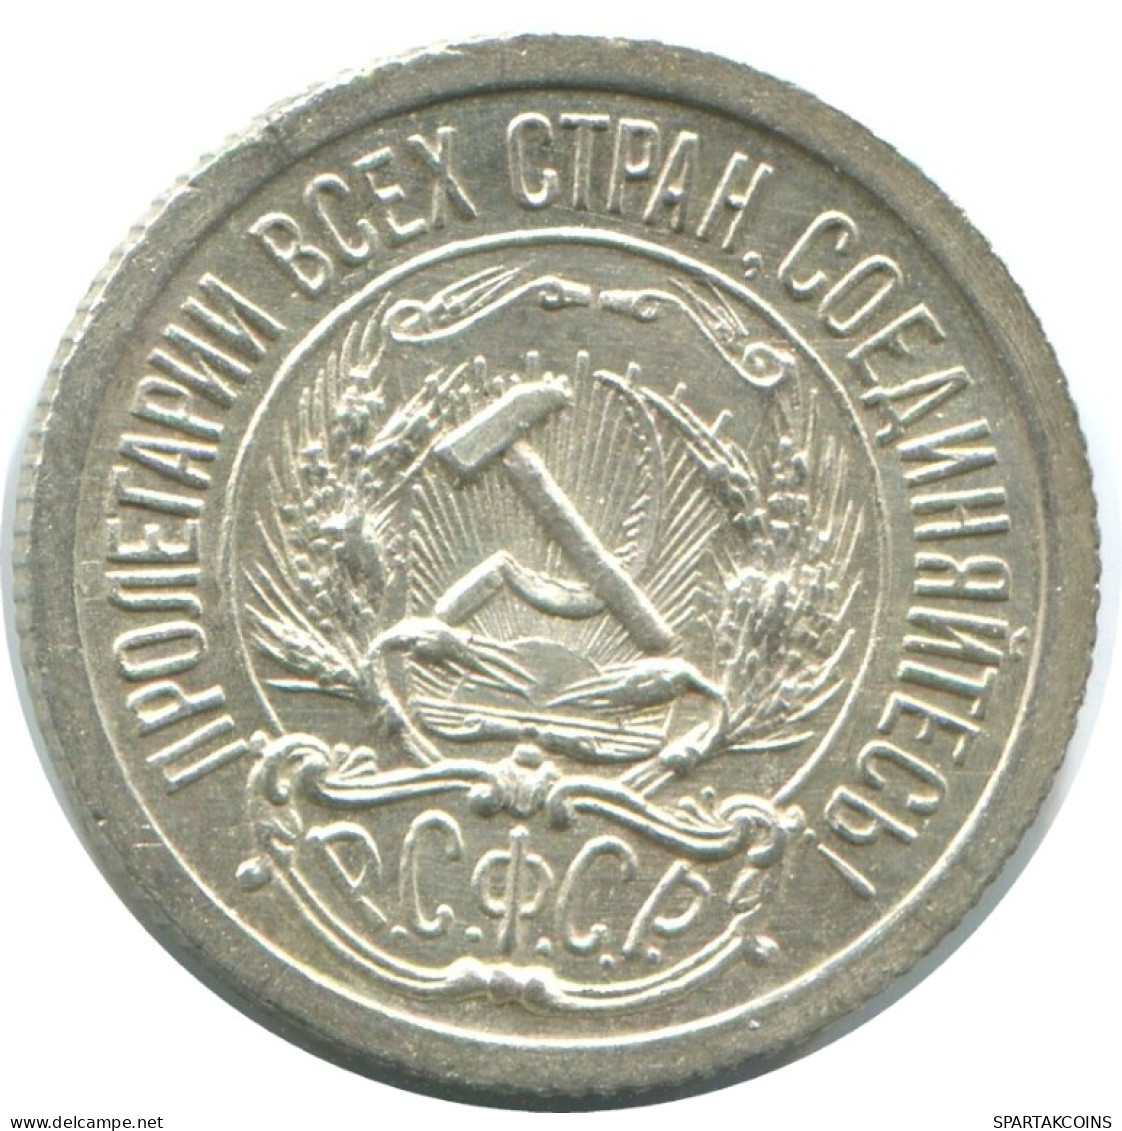 10 KOPEKS 1923 RUSSIA RSFSR SILVER Coin HIGH GRADE #AE987.4.U.A - Russia